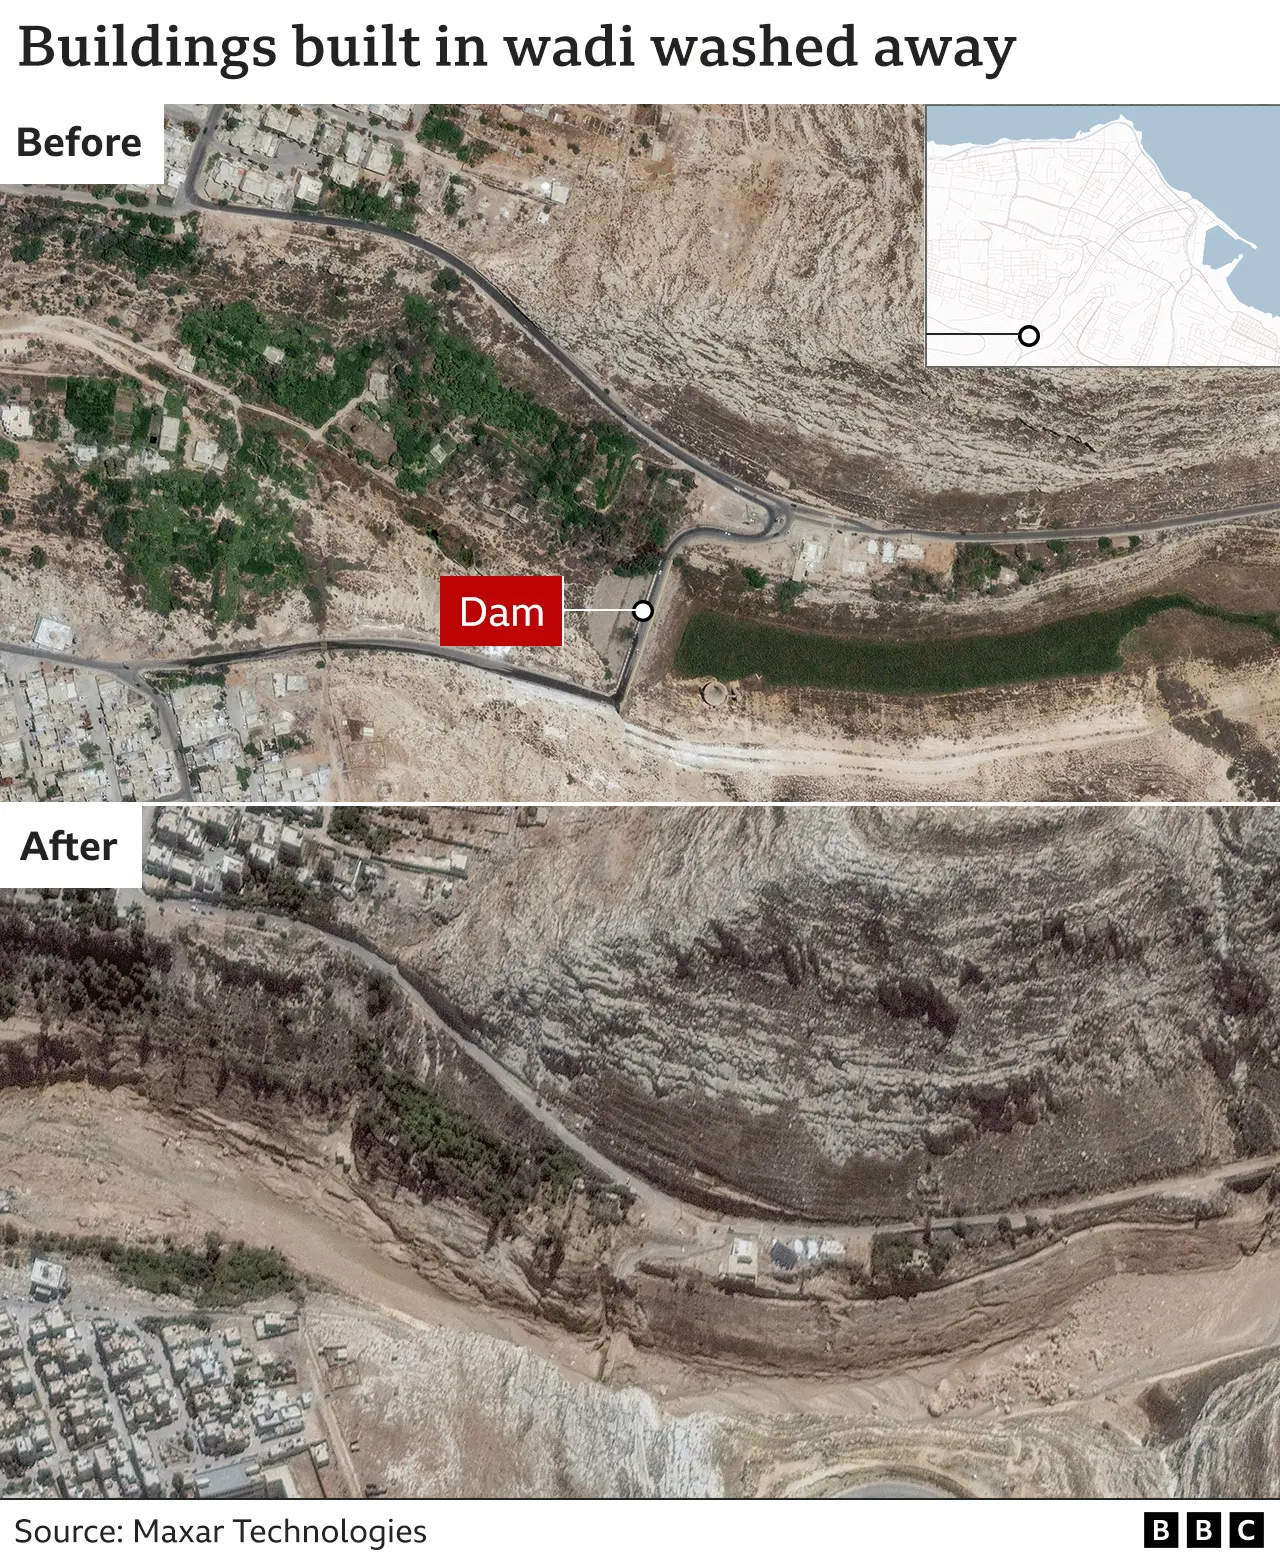 Libya Dams Were in Danger, Engineer Warned - The New York Times